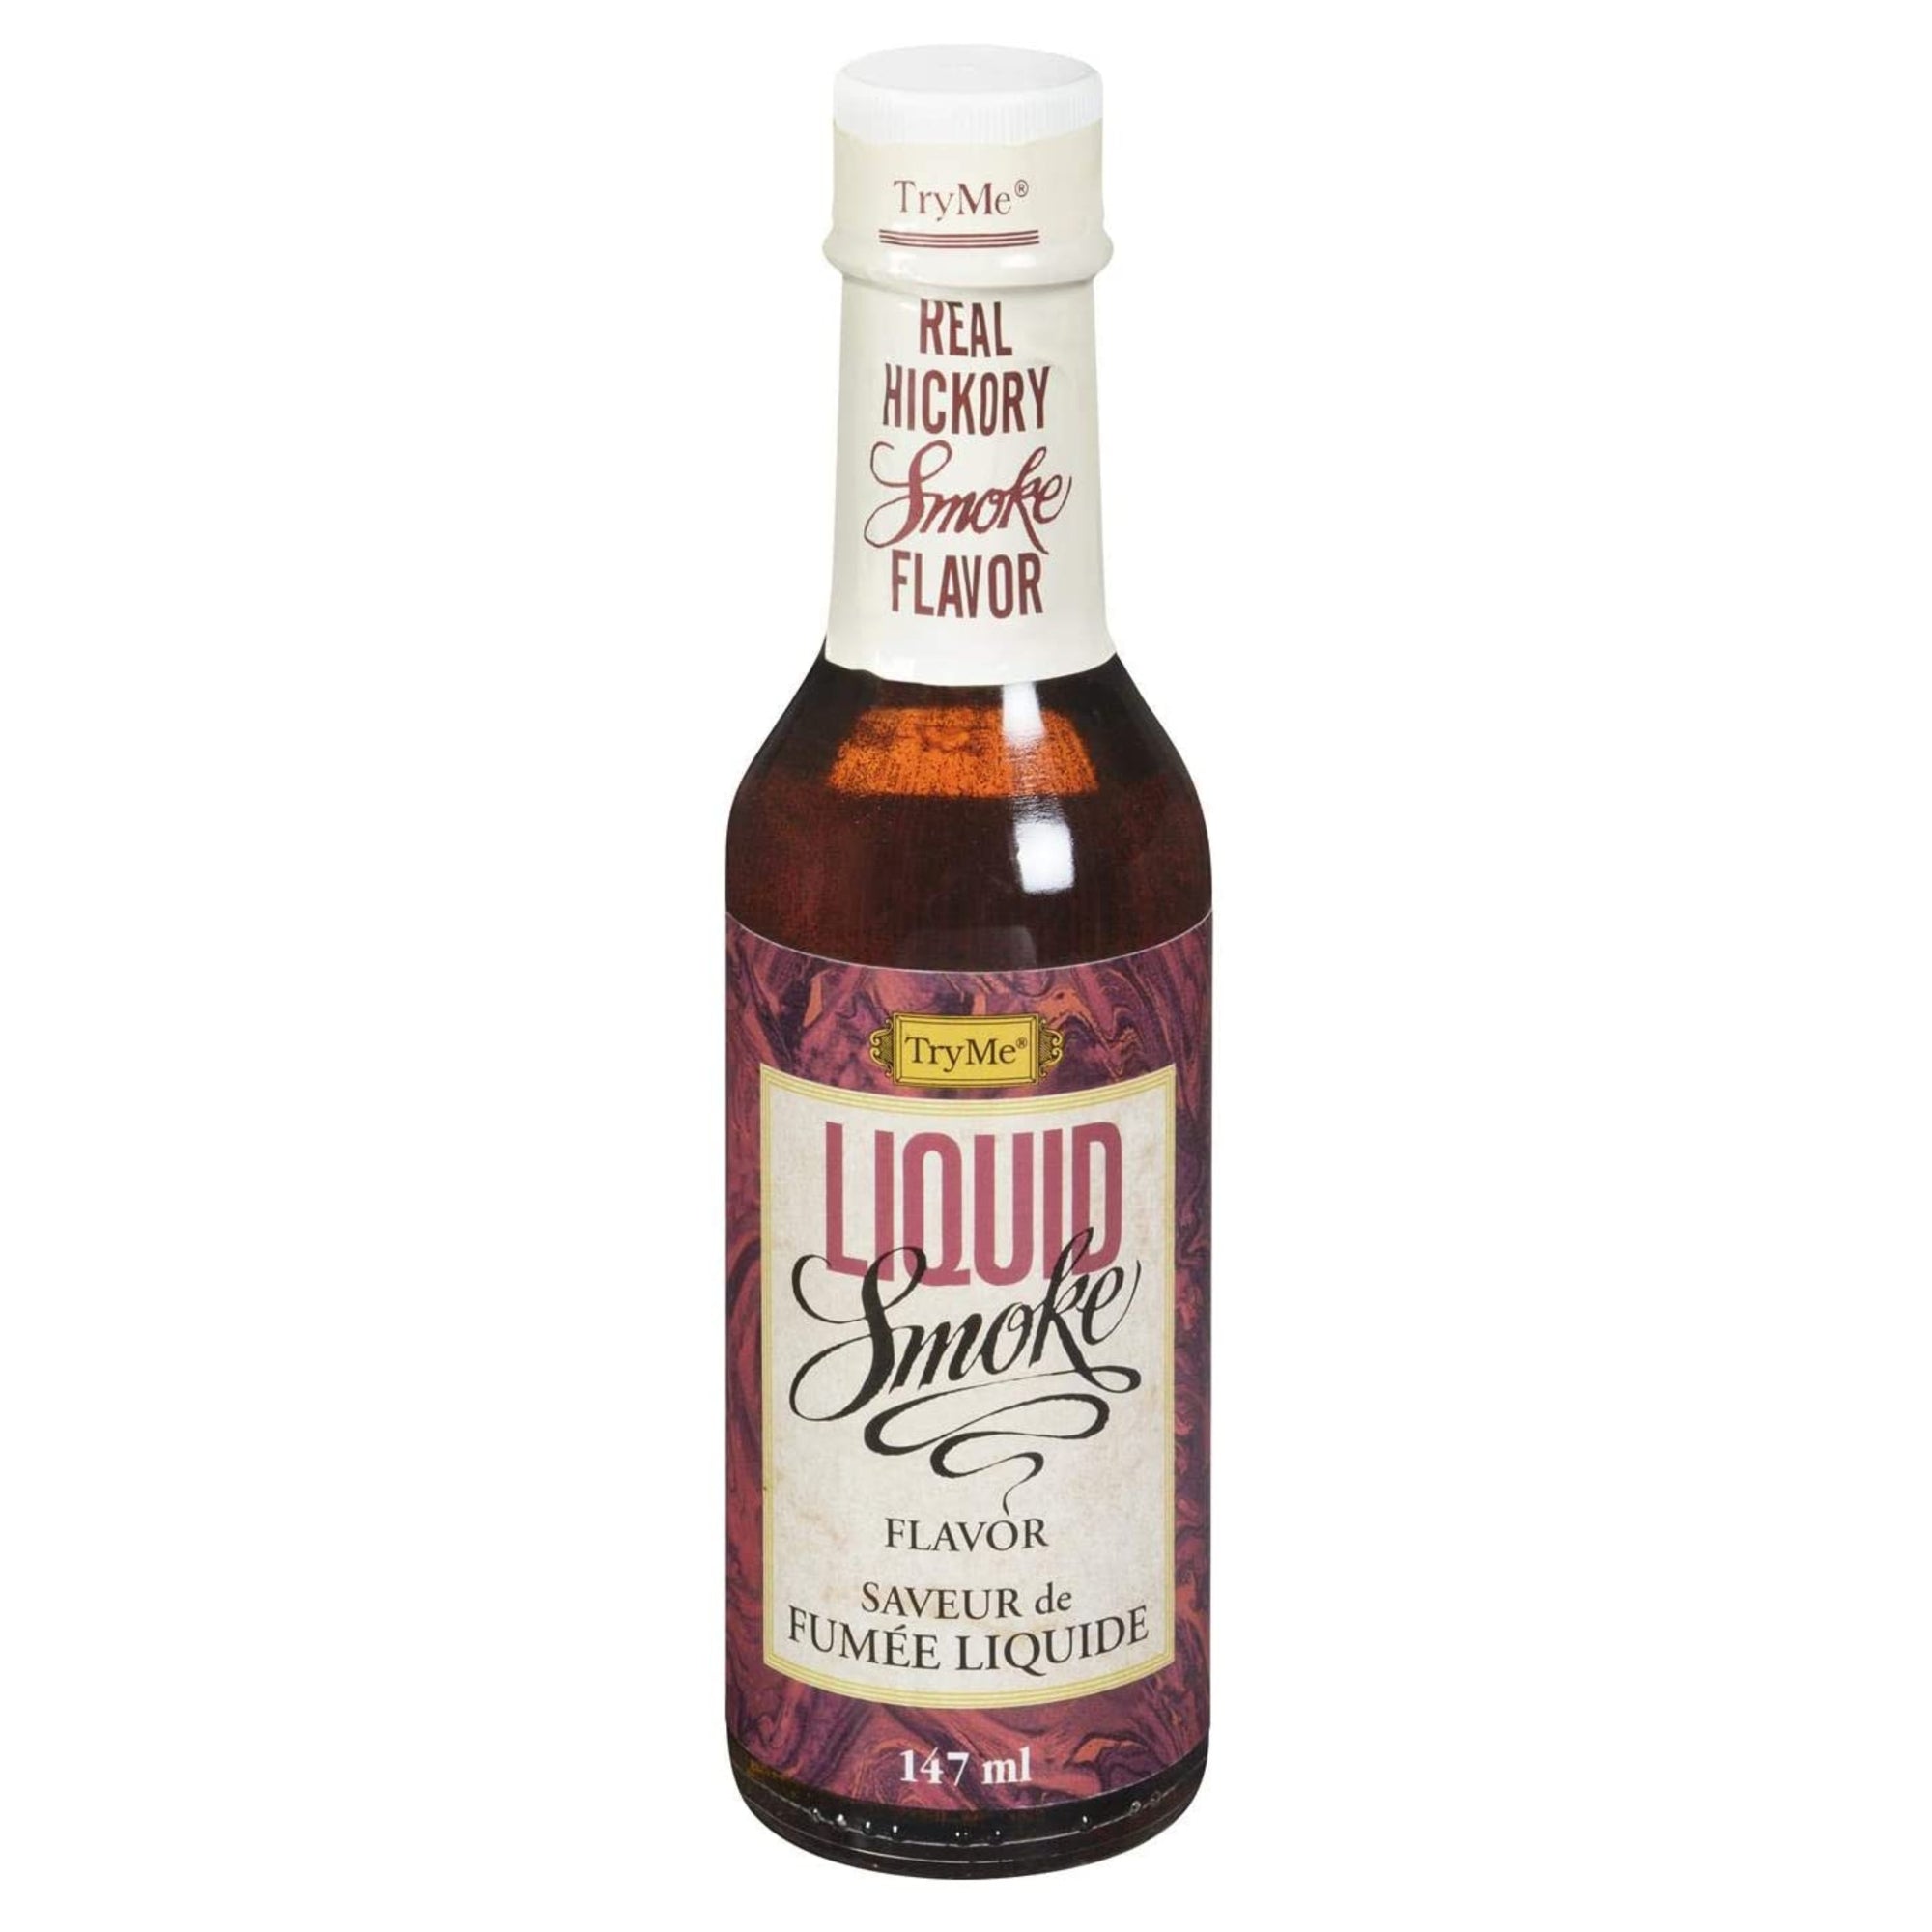 Try Me Liquid Smoke Hickory Flavour - 147ml